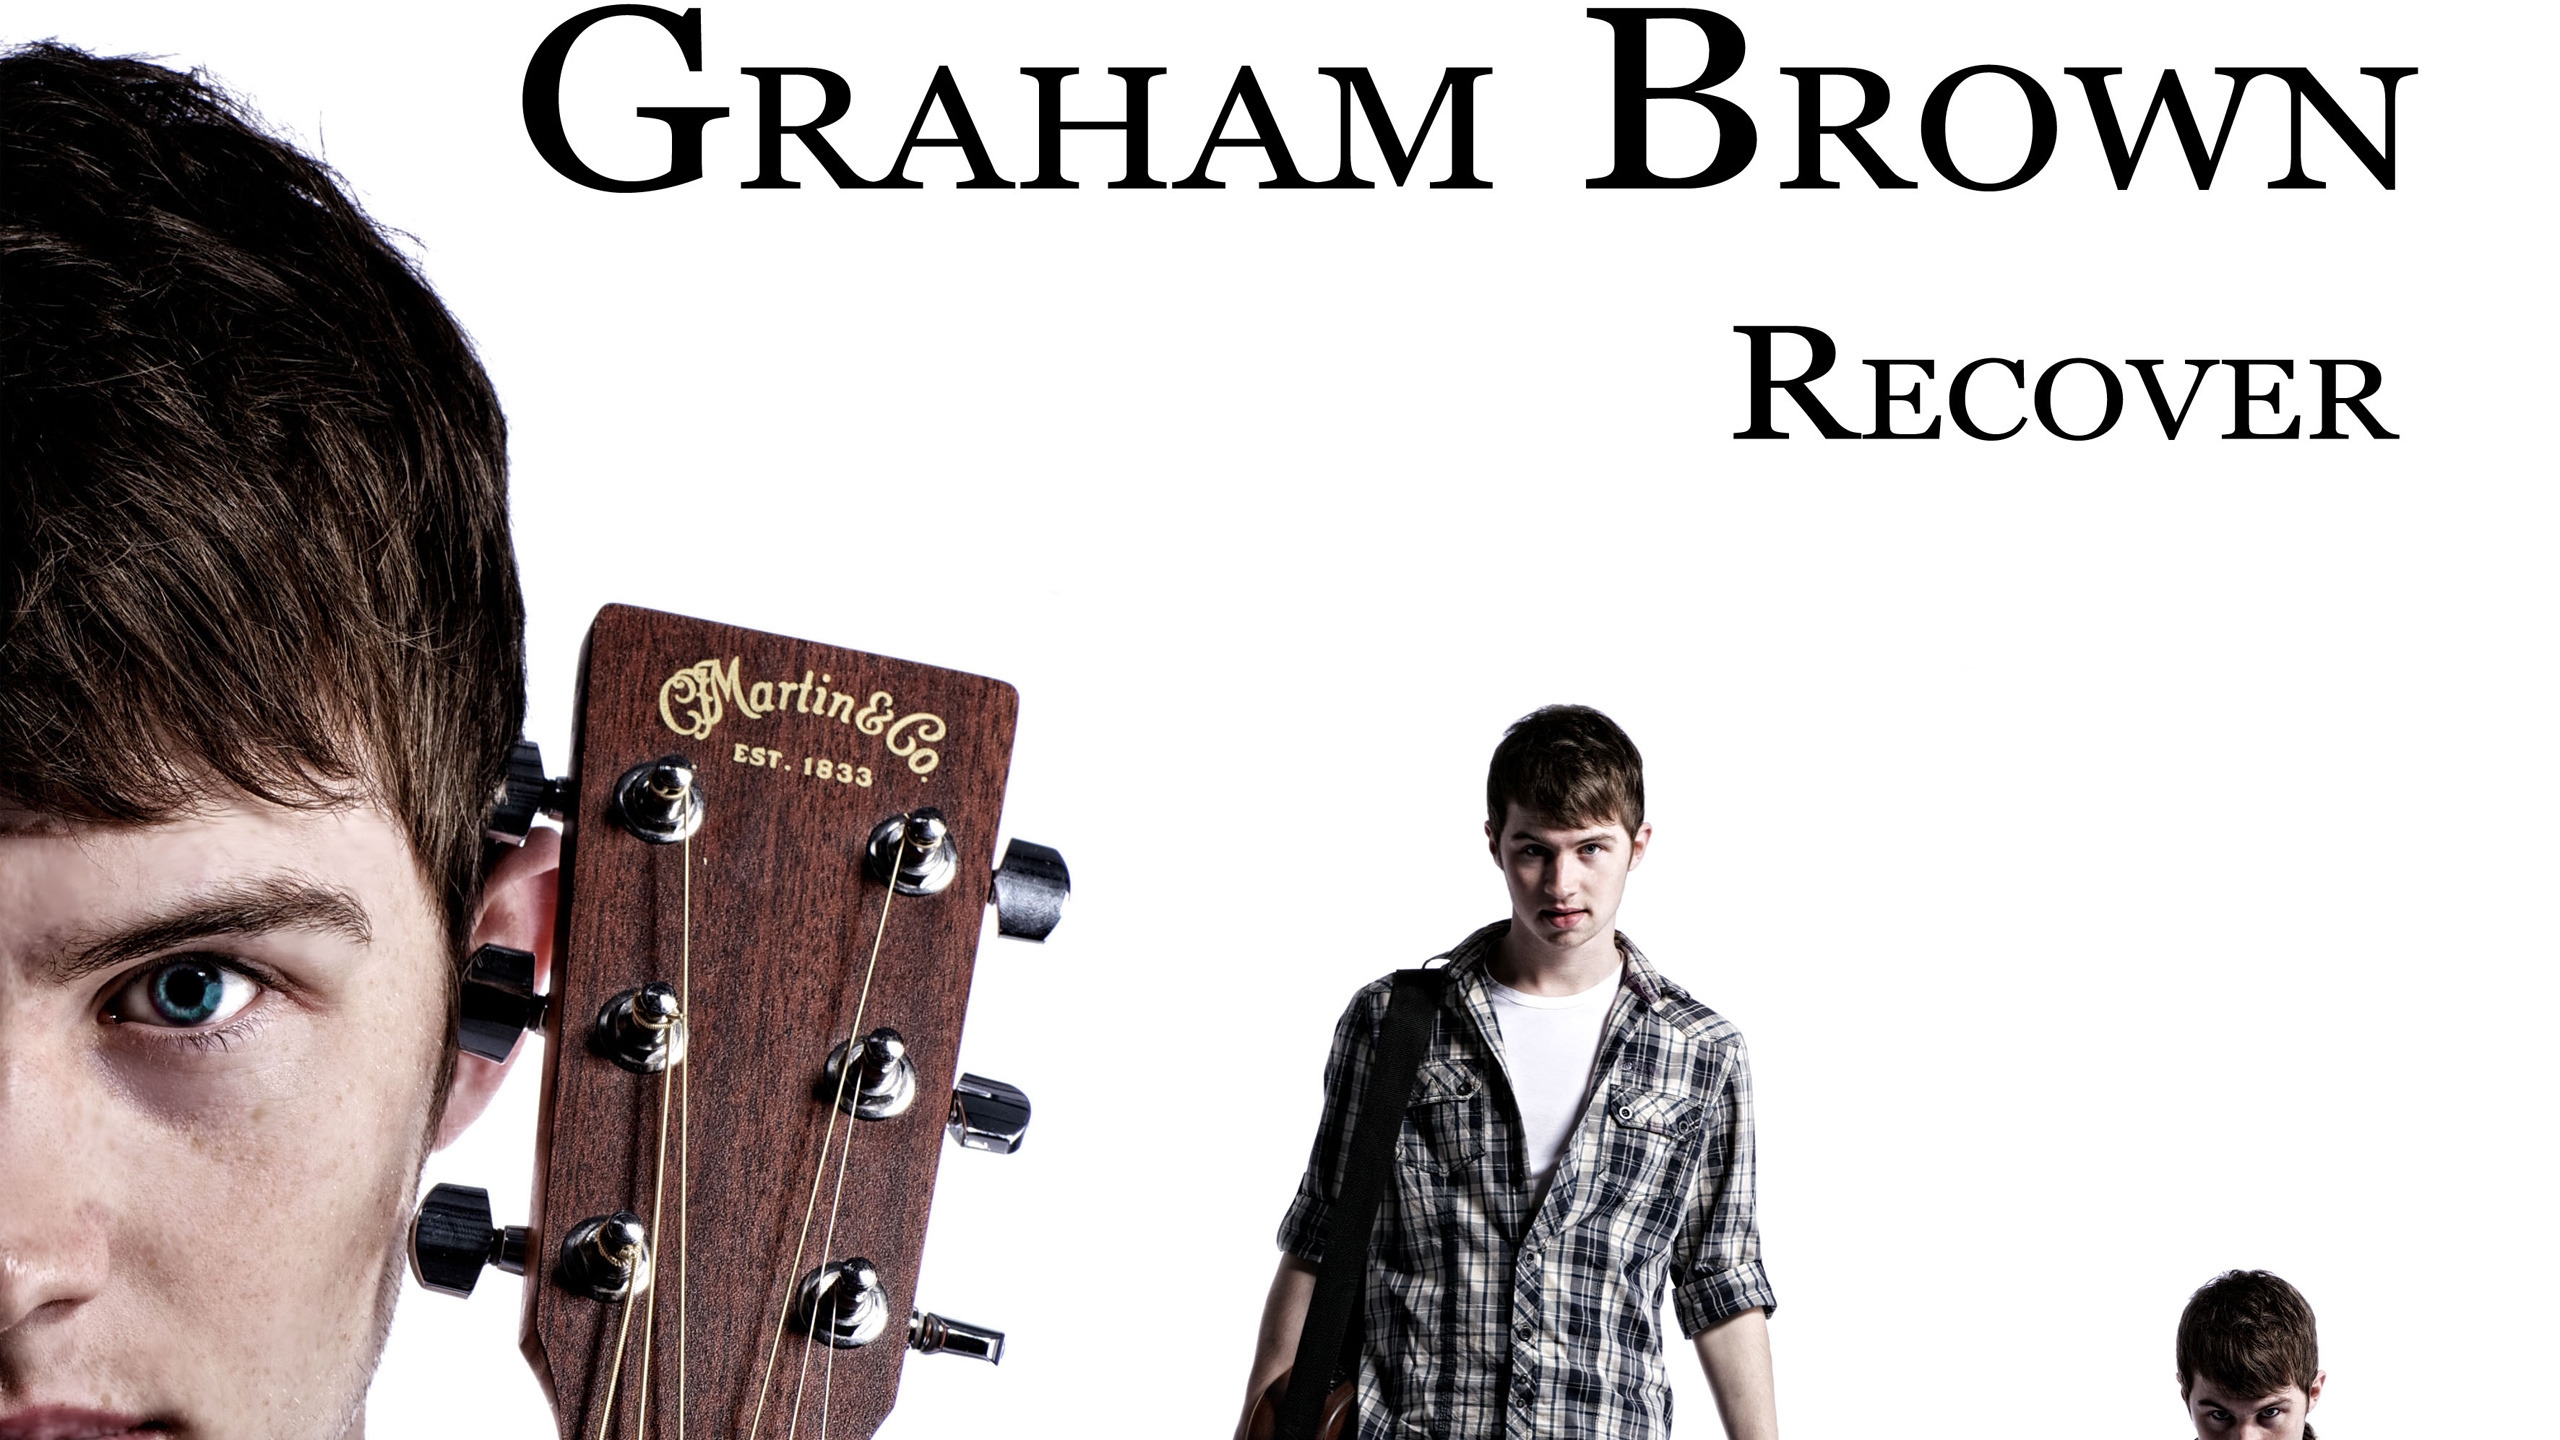 Graham Brown Band for 2560x1440 HDTV resolution